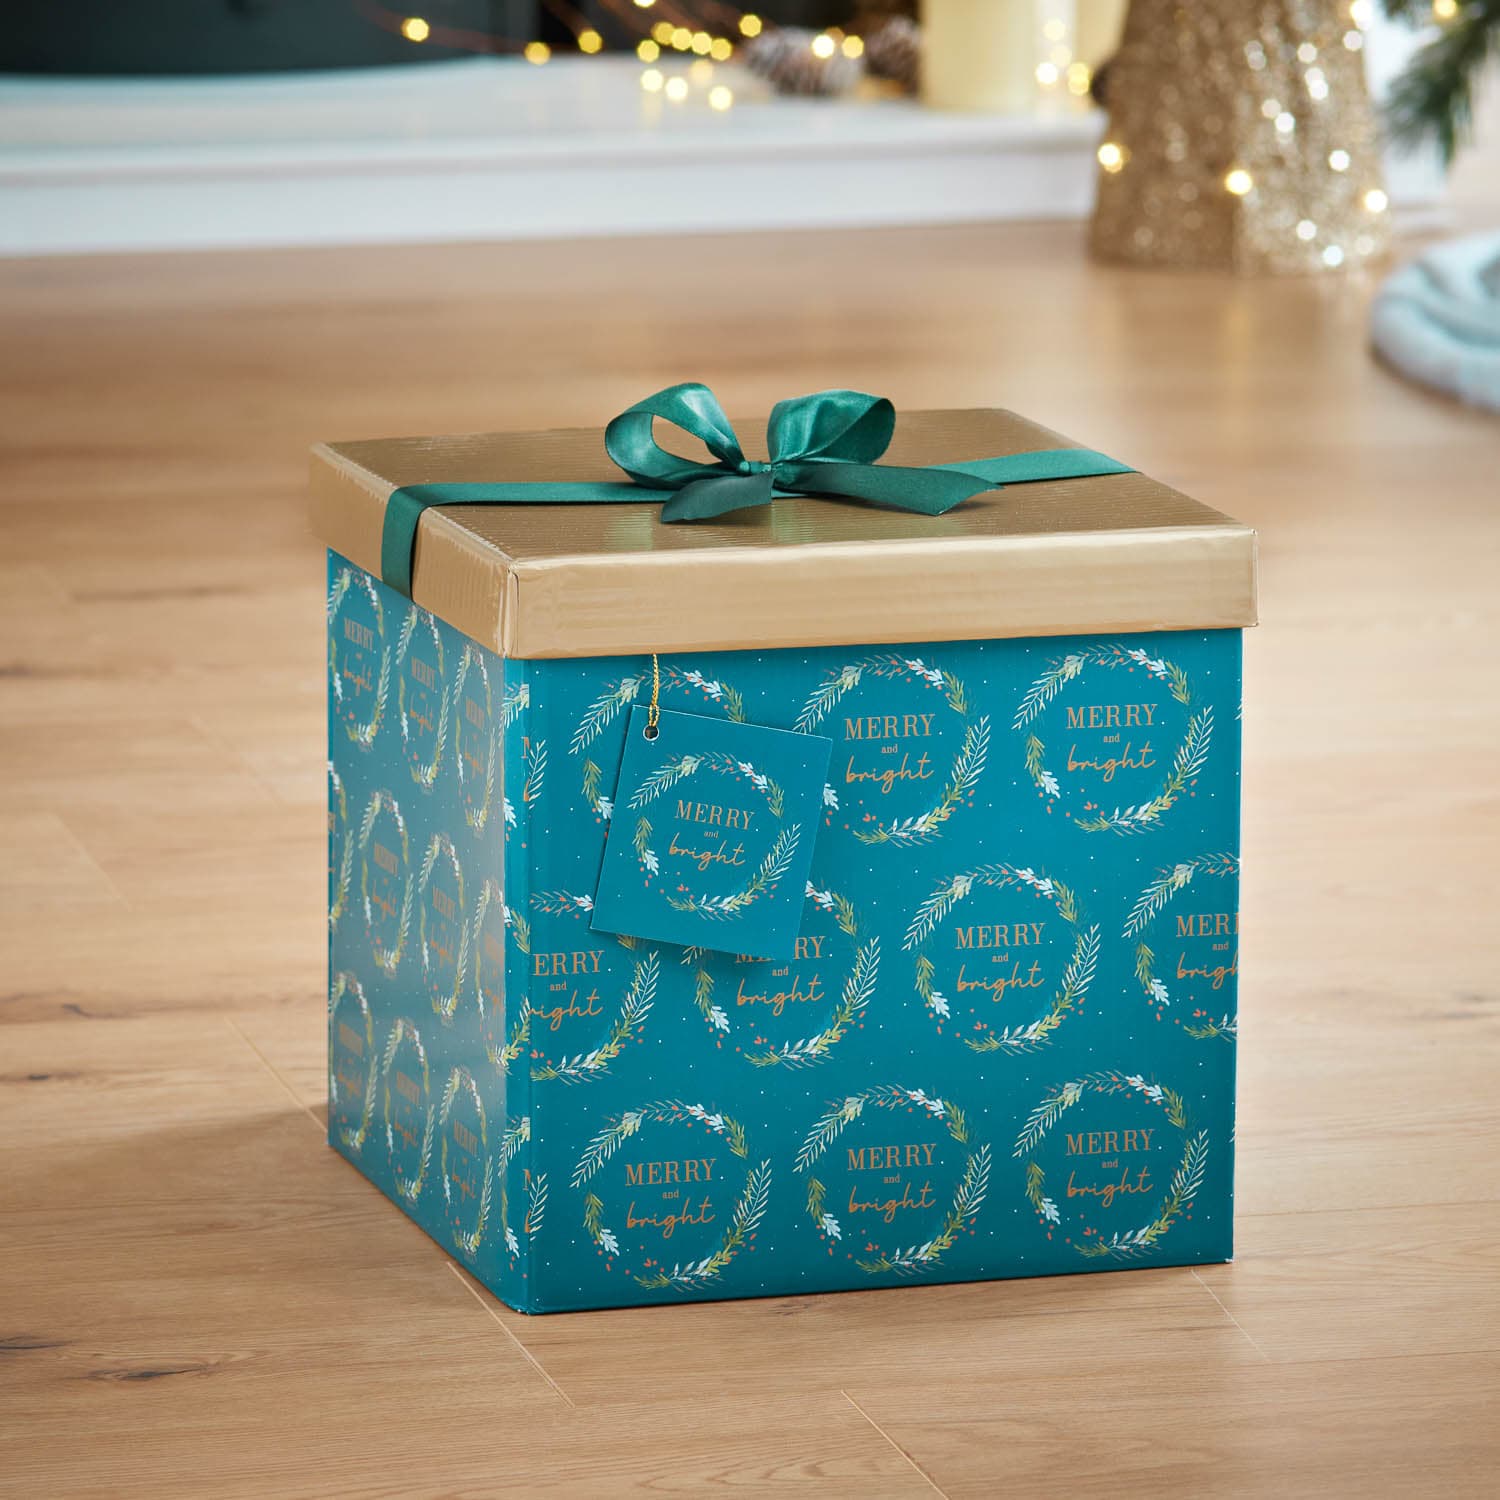 Gift box grey board | How was a beautiful gift box printed?